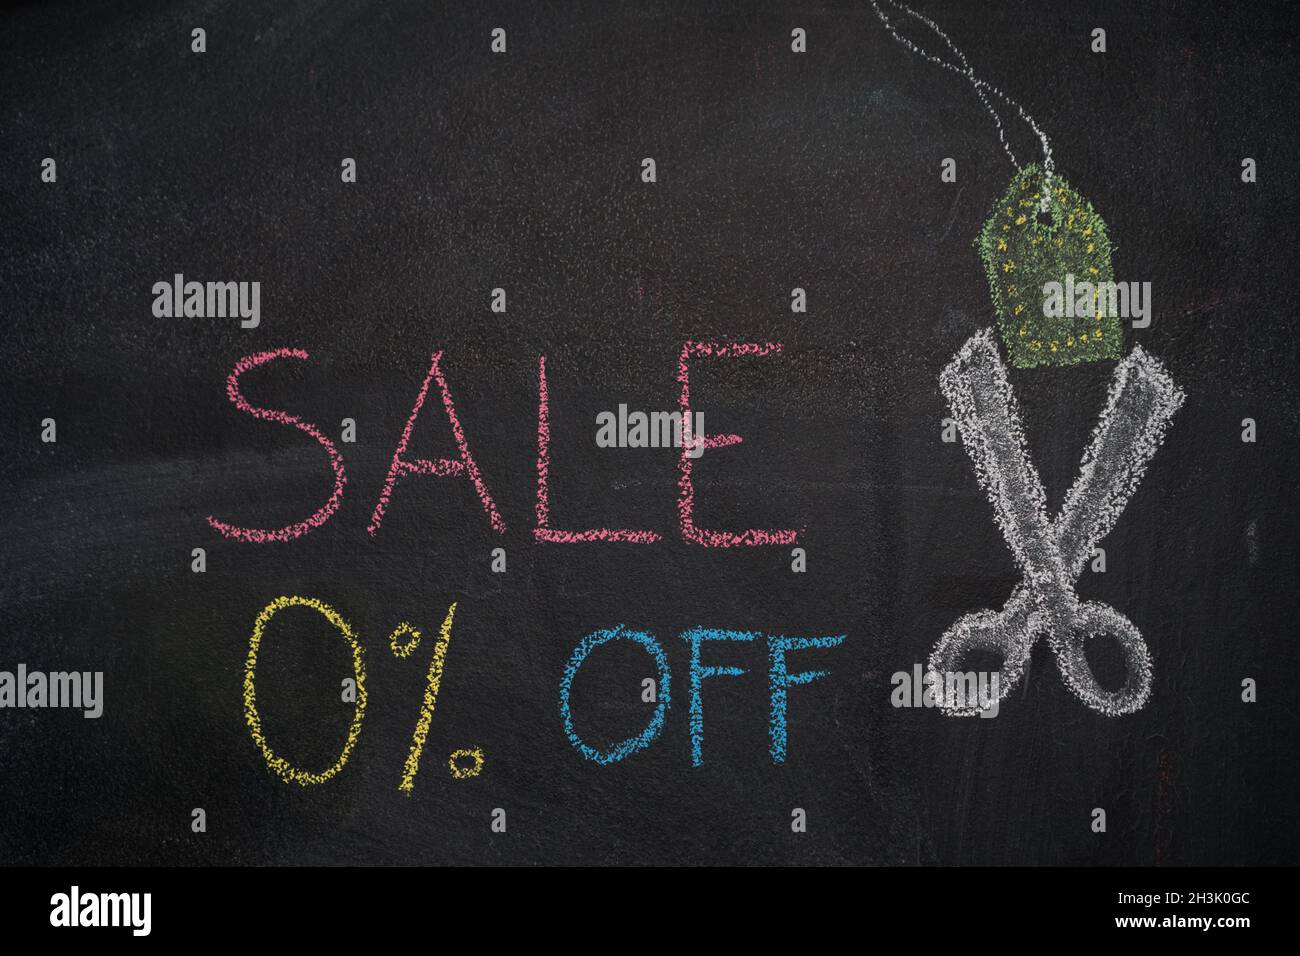 Sale 0% off on chalkboard Stock Photo